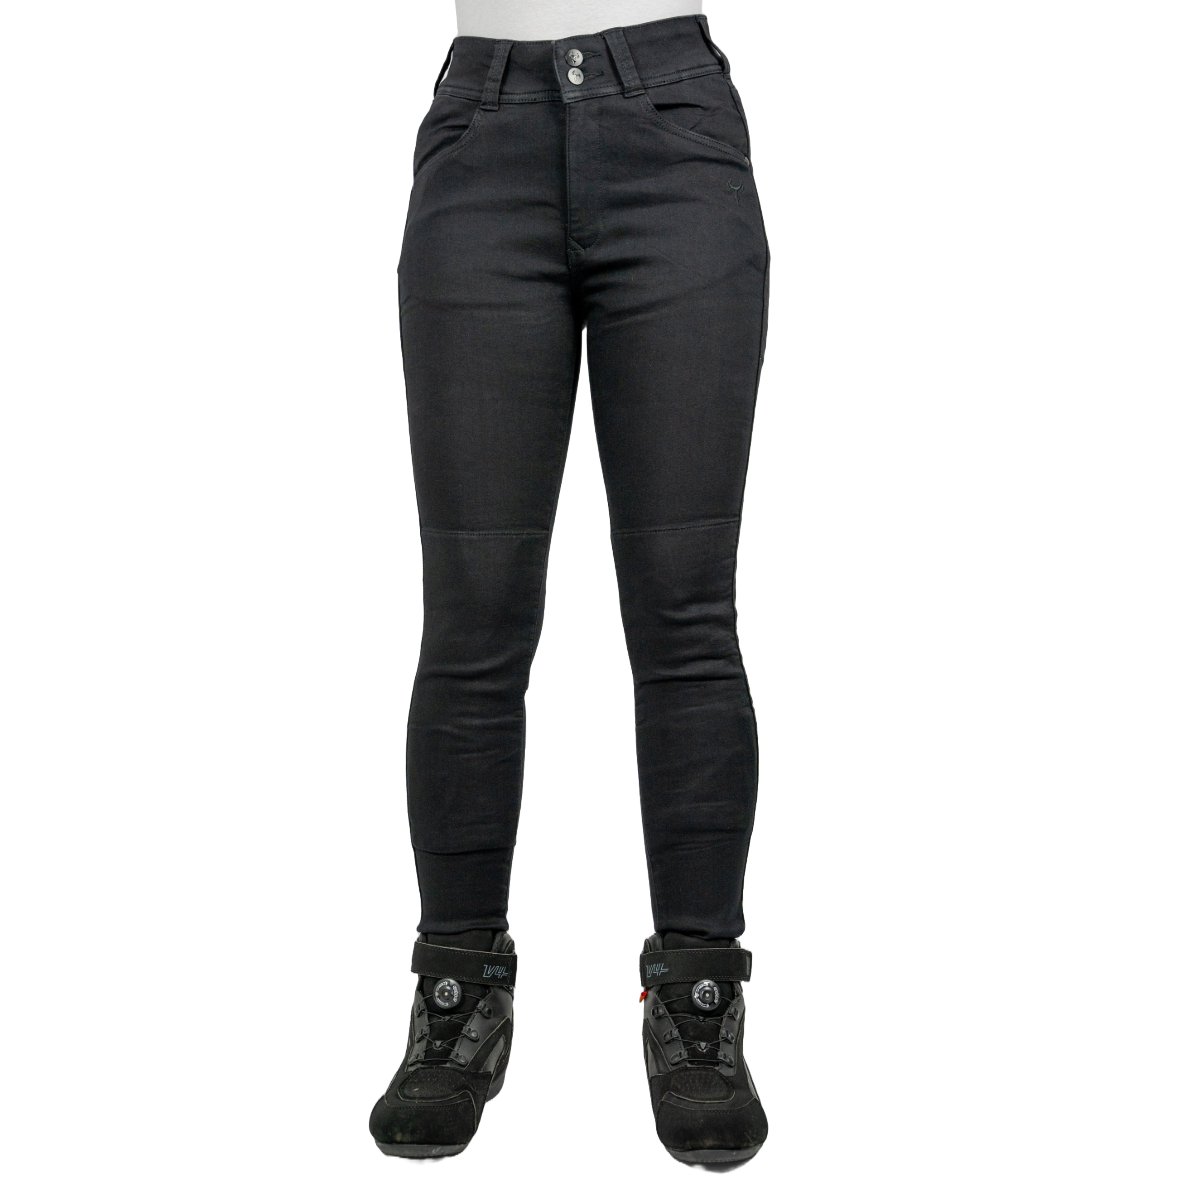 Image of Bull-it Ladies Fury Skinny Fit Short Pants Black Size 36 ID 5059684008821